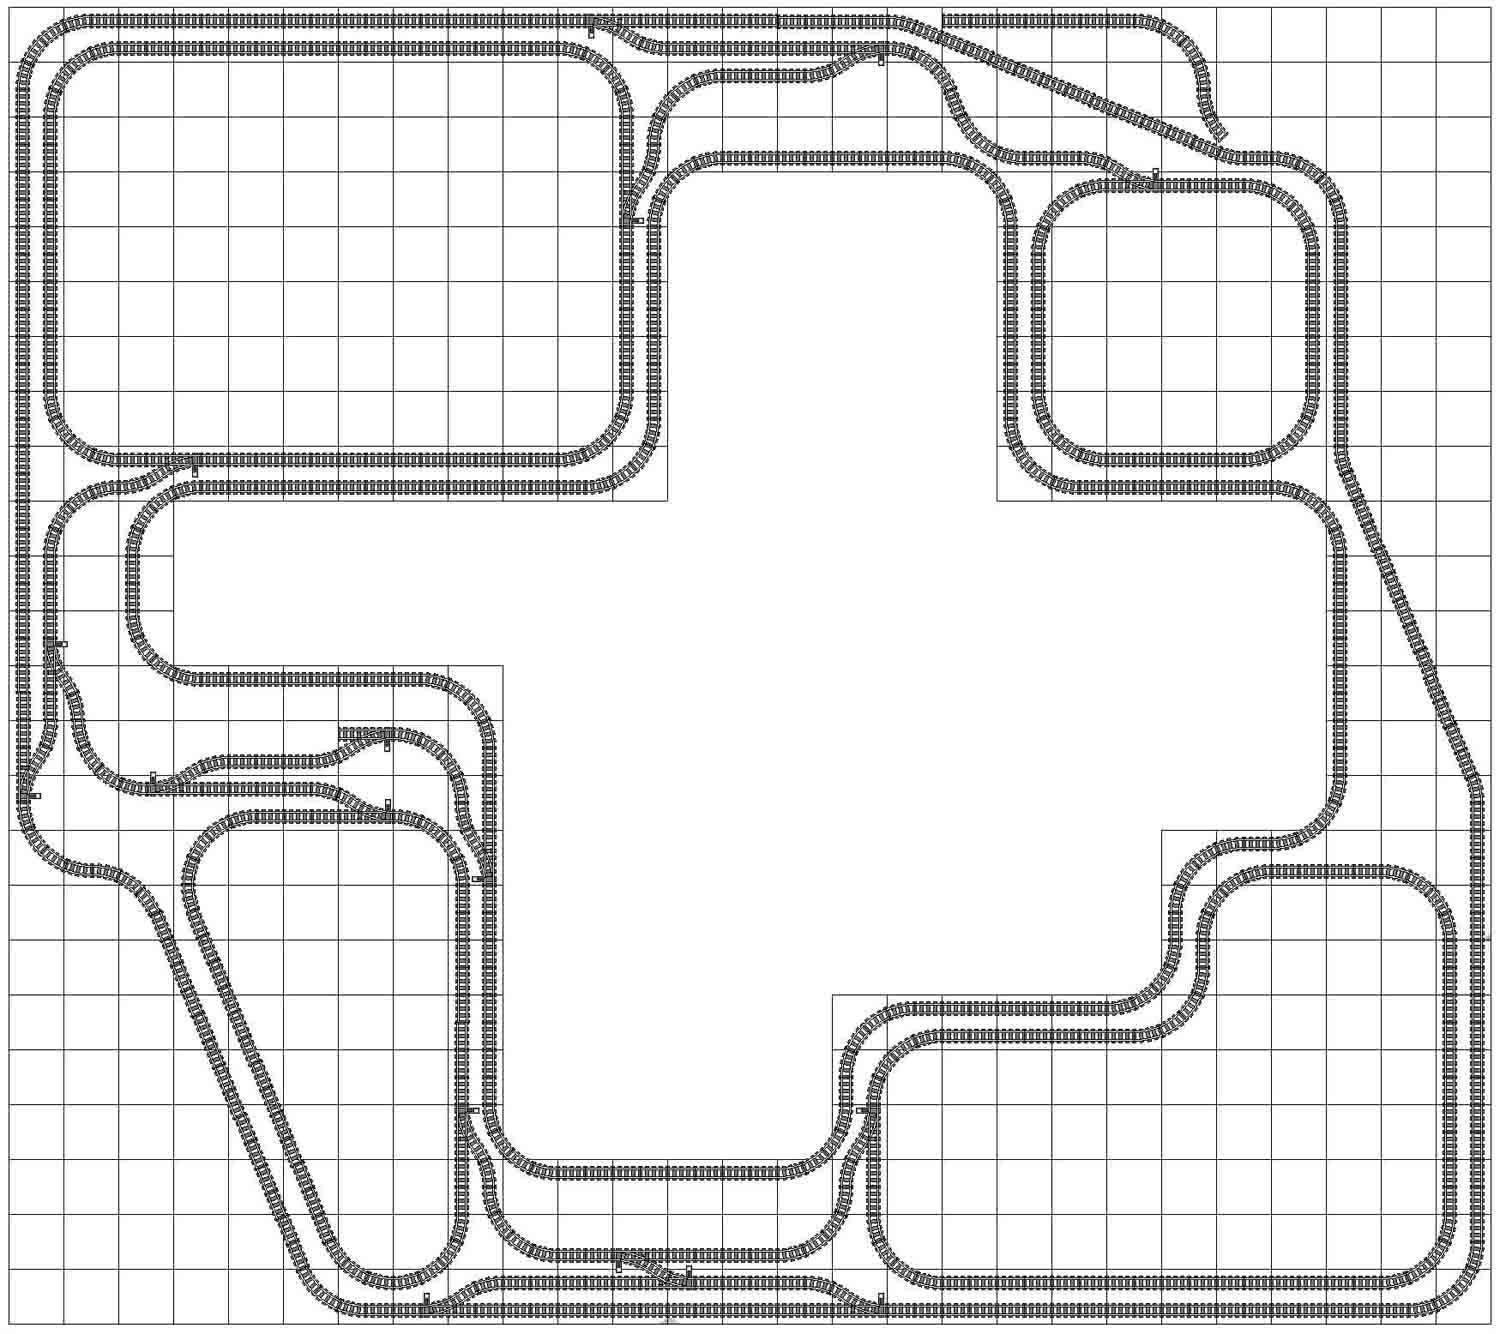 lego train track layout